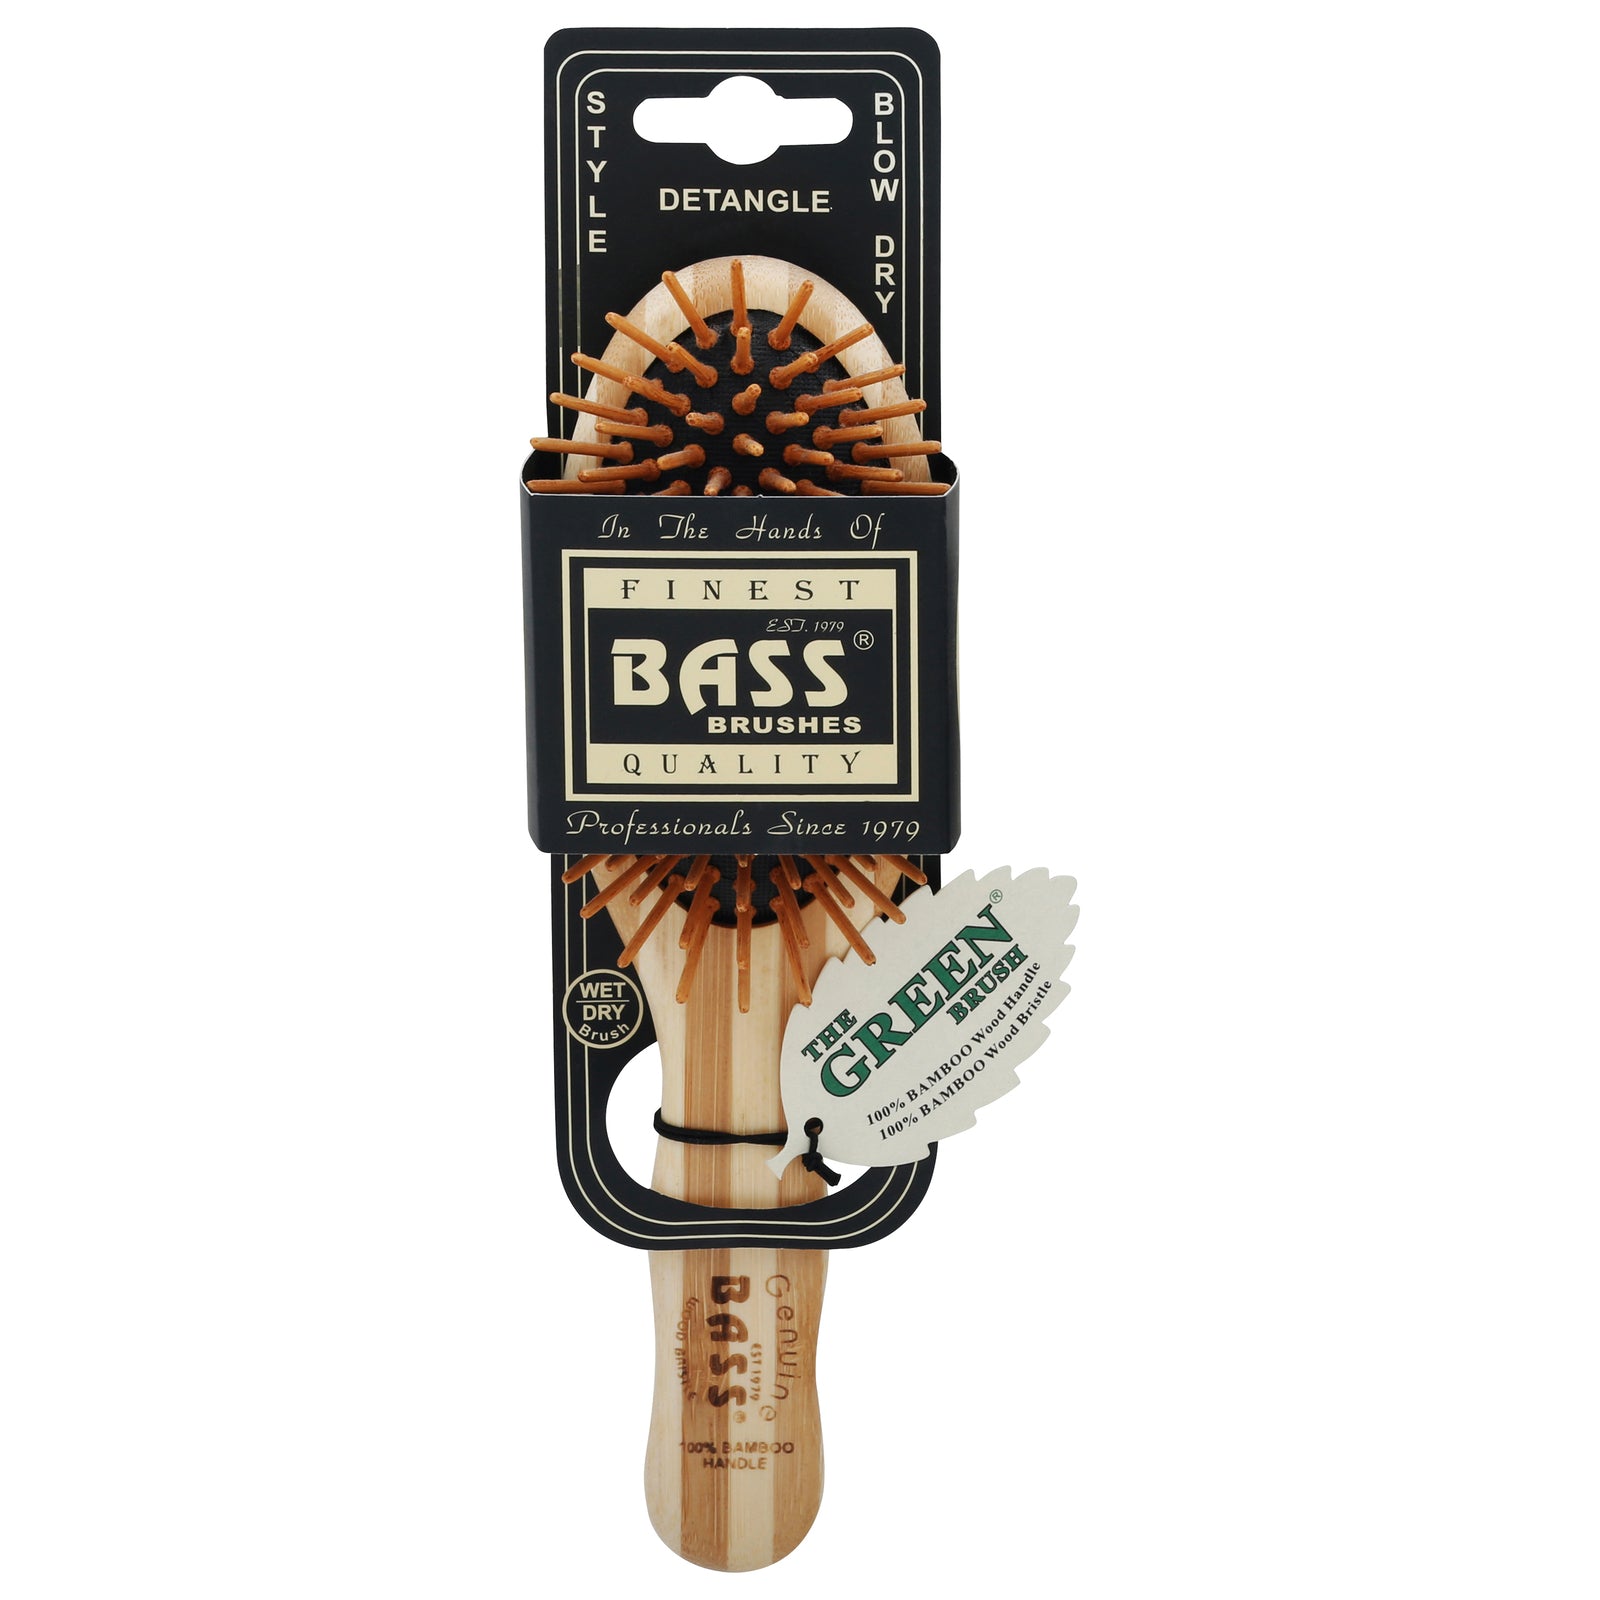 Bass Brushes - Brush Sm Wood Brstl Bambo - 1 Each - Ct